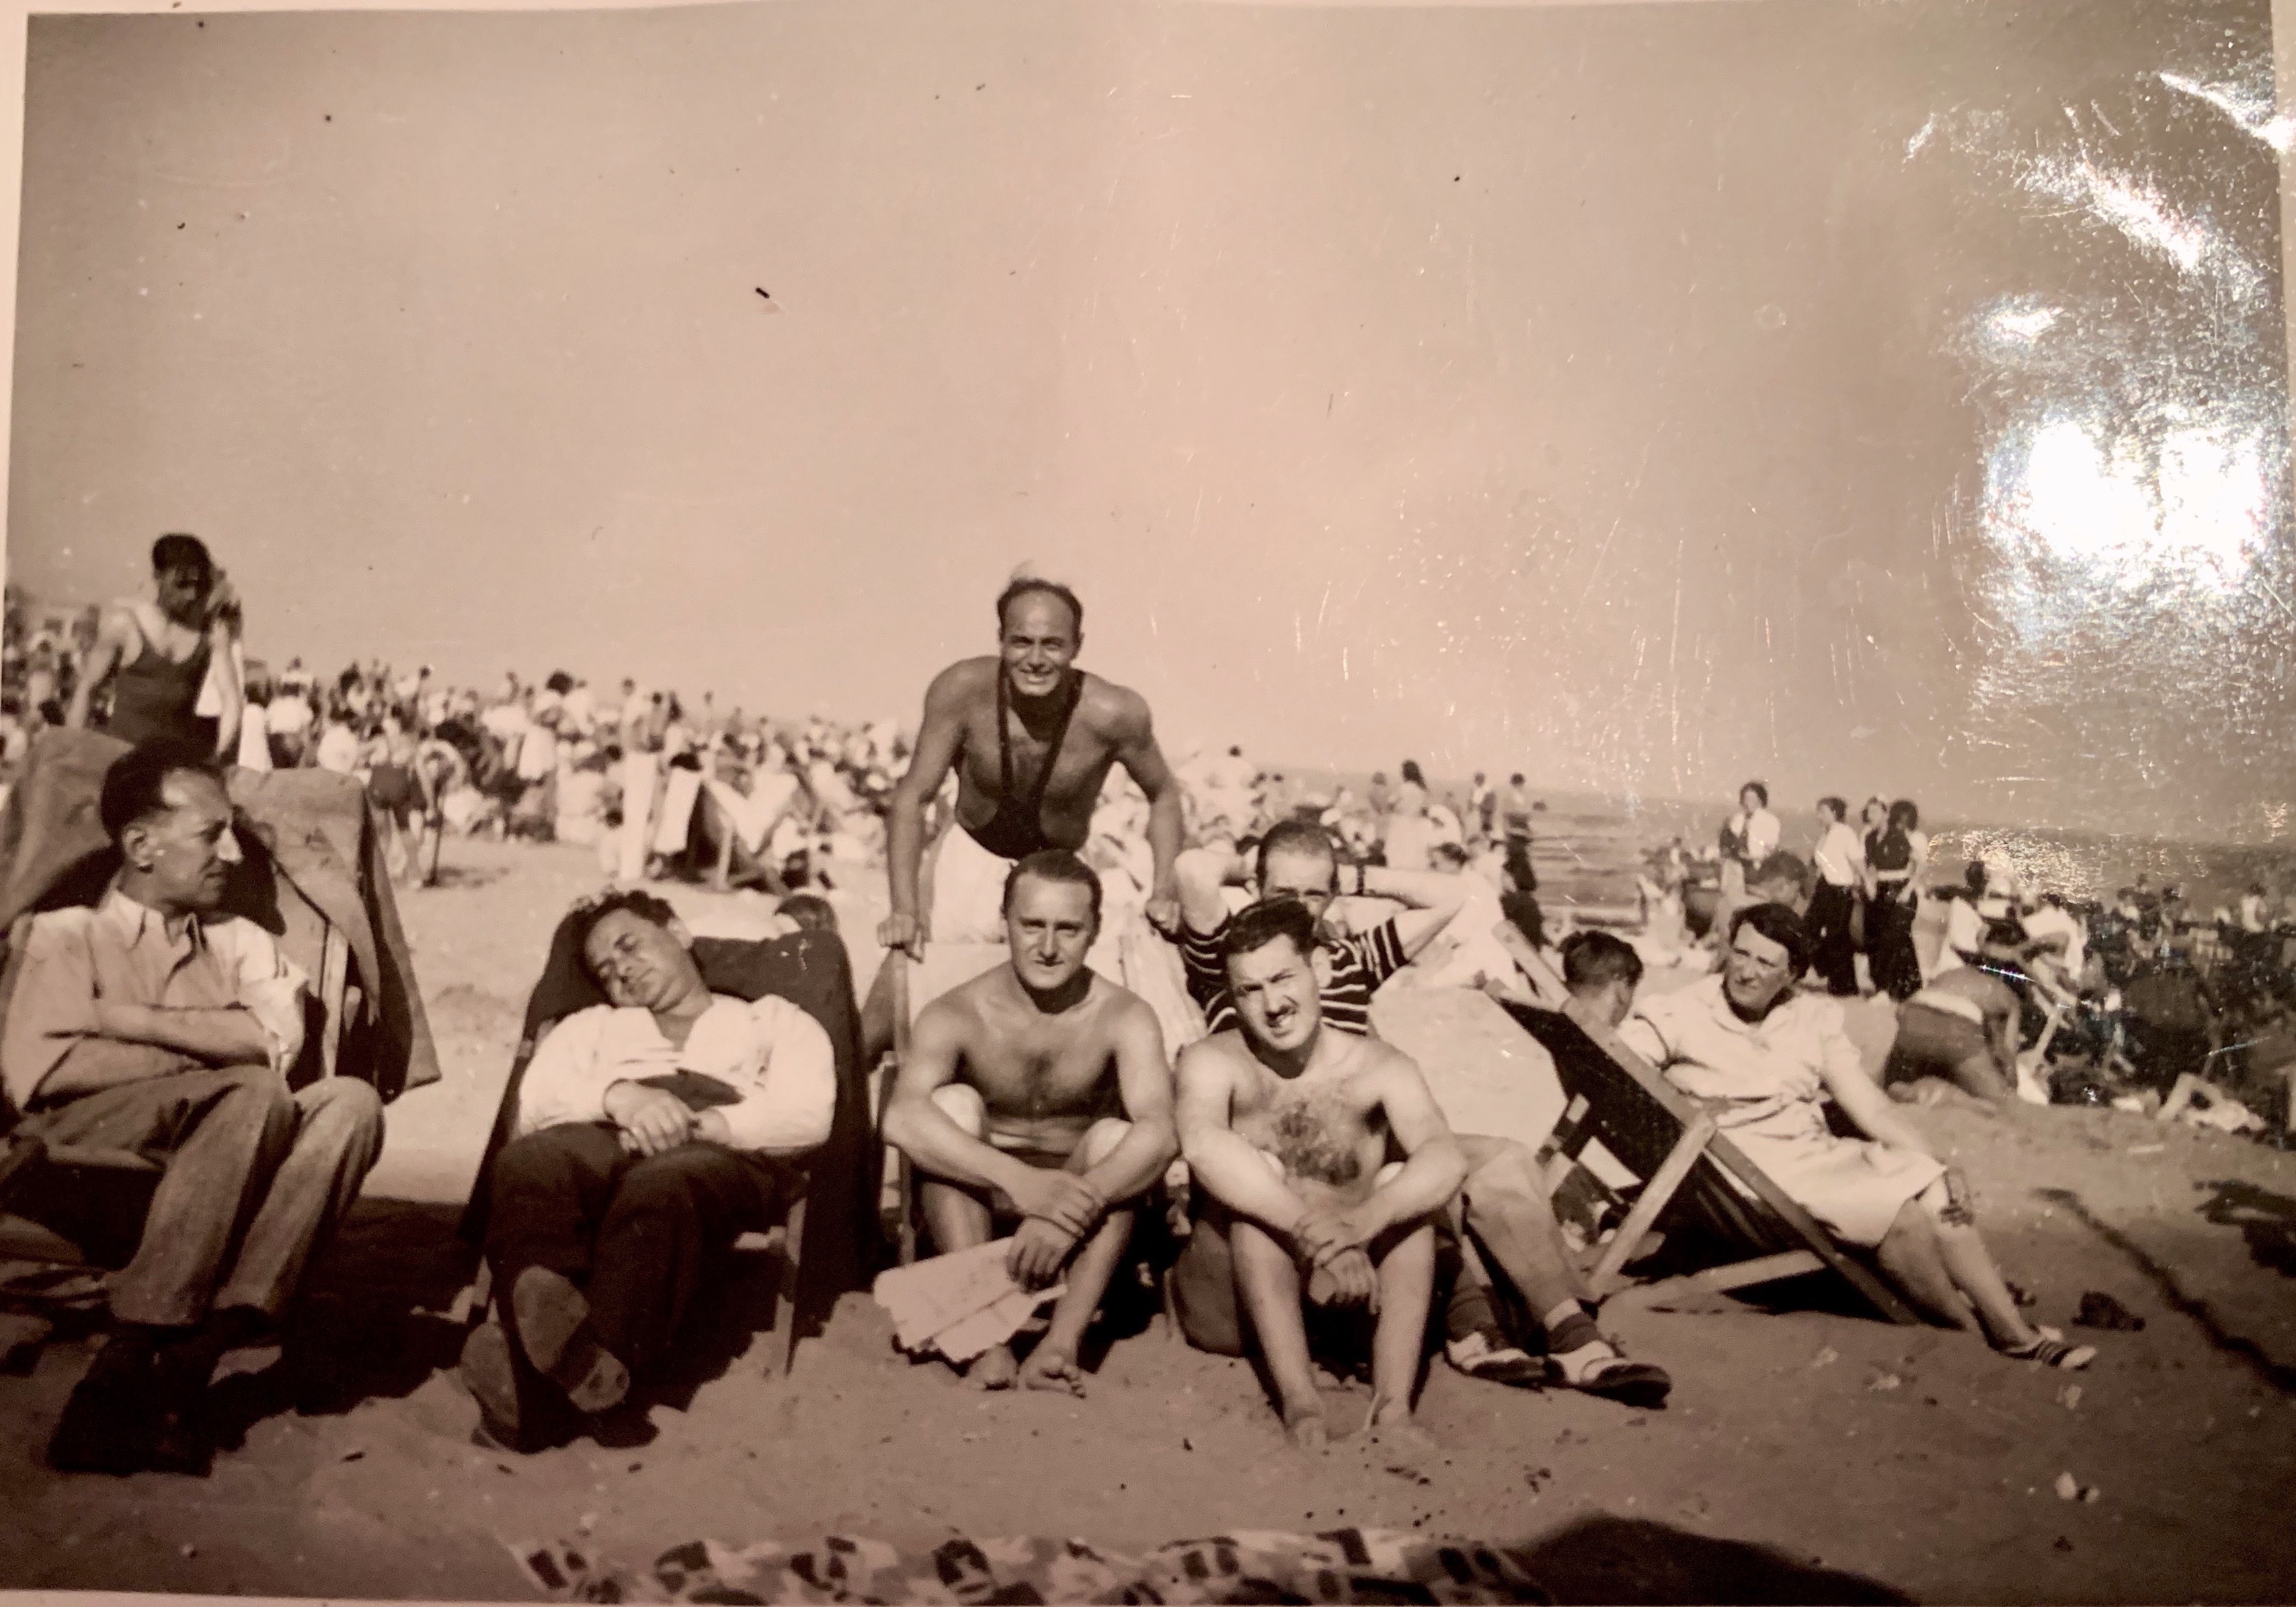 Kitchener camp, Oskar Reininger, Relaxing on the beach with friends, Summer 1939